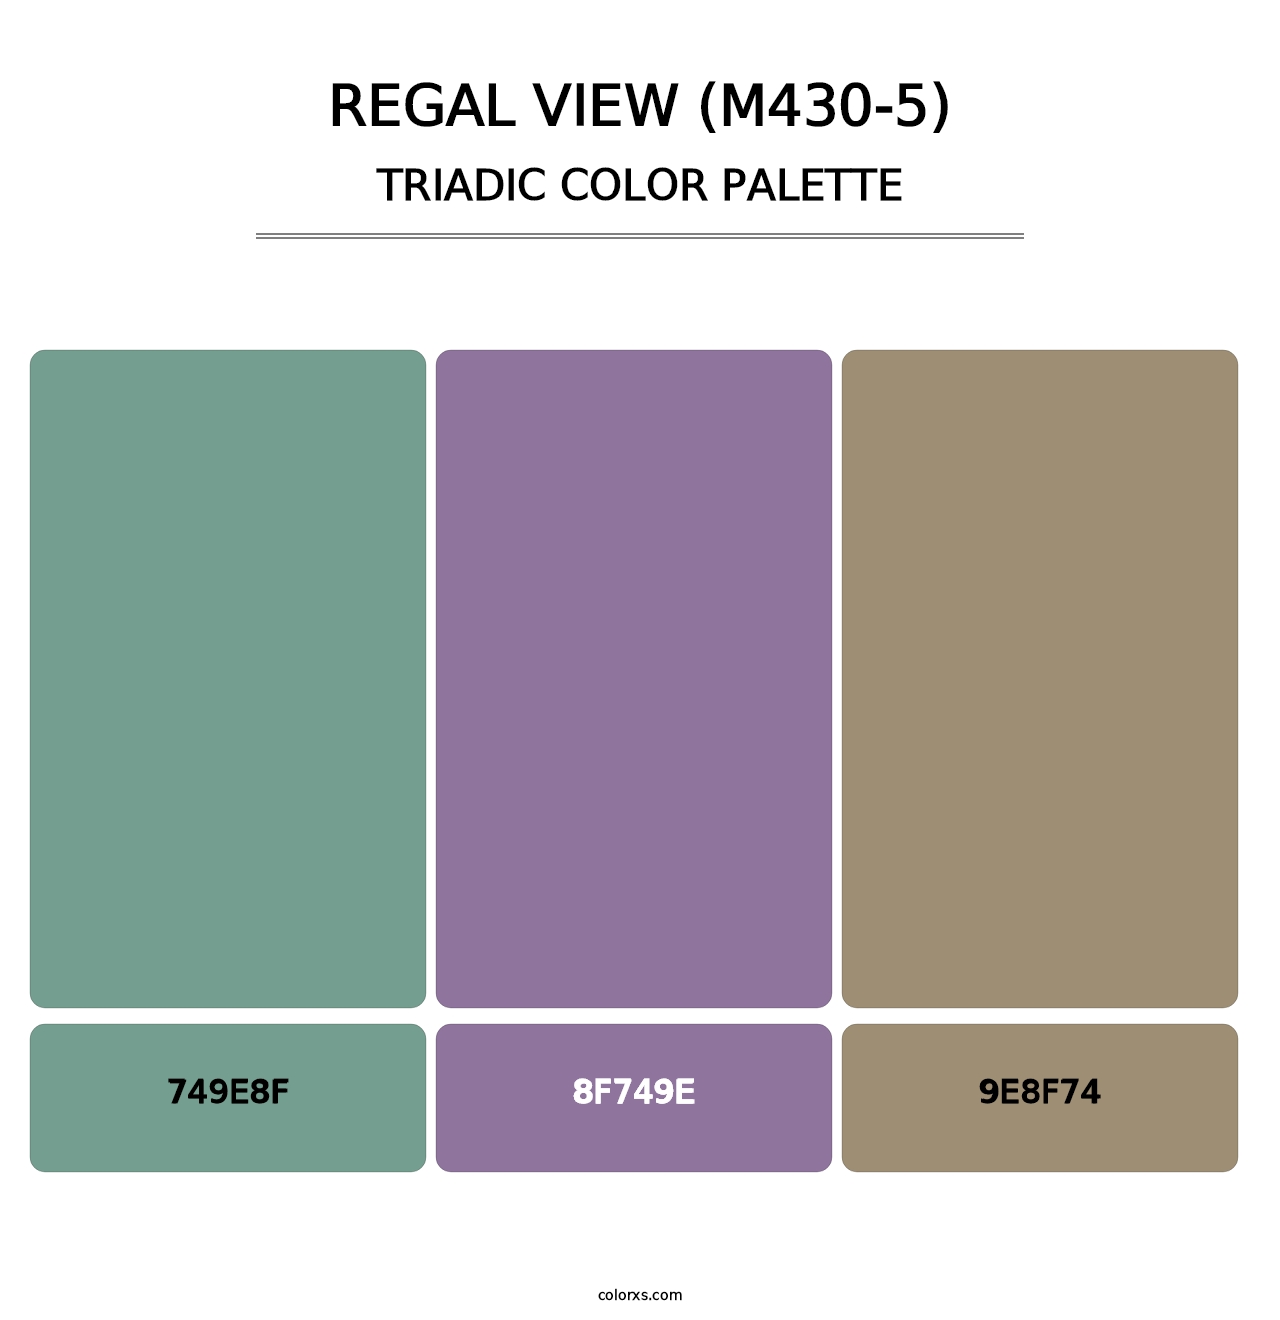 Regal View (M430-5) - Triadic Color Palette